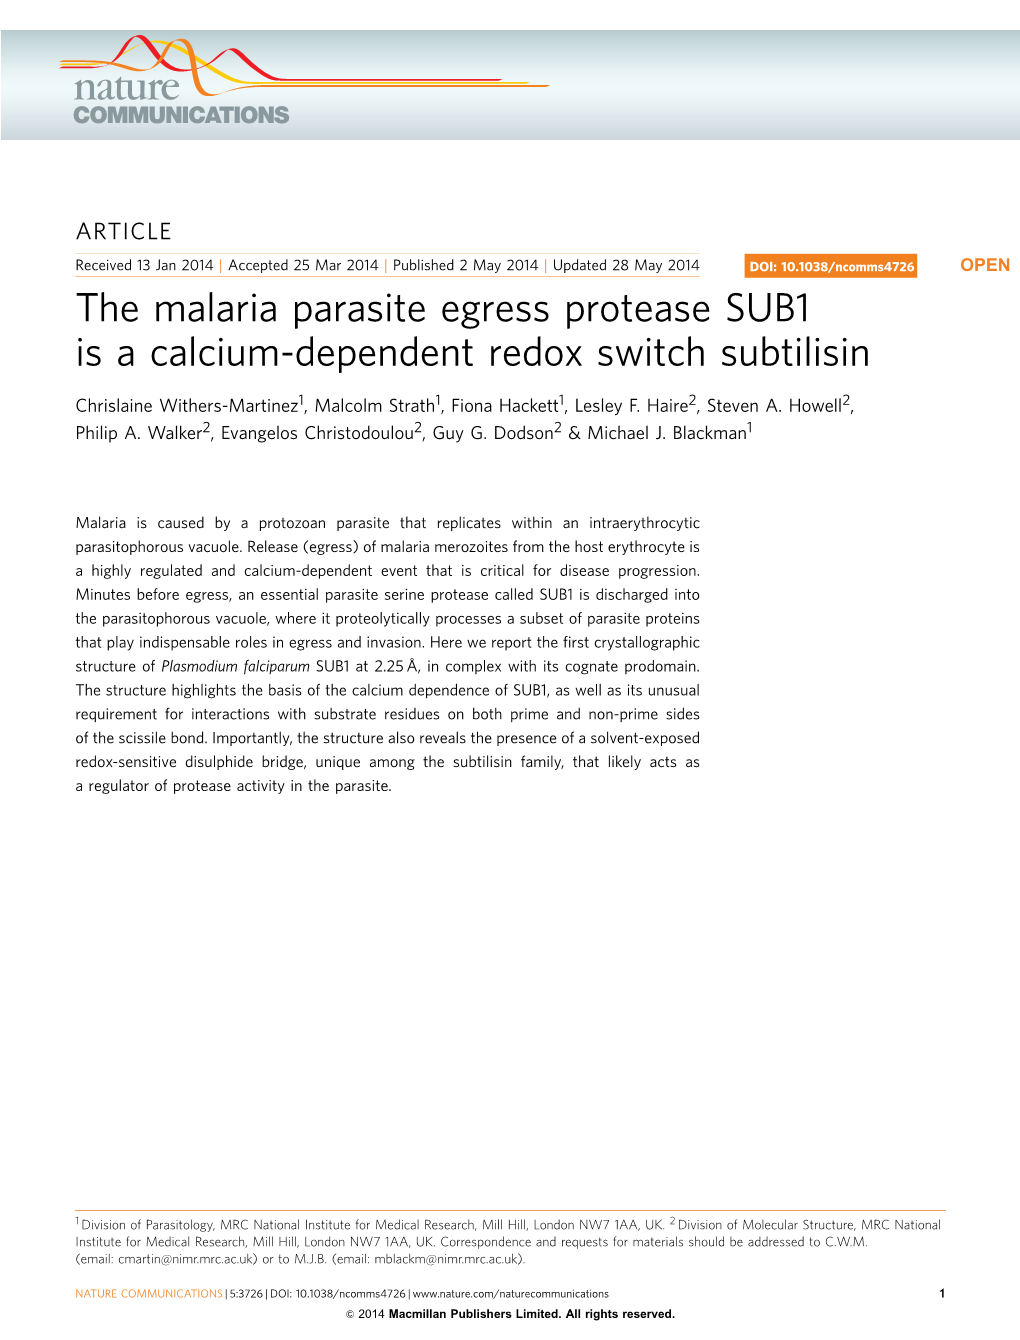 The Malaria Parasite Egress Protease SUB1 Is a Calcium-Dependent Redox Switch Subtilisin